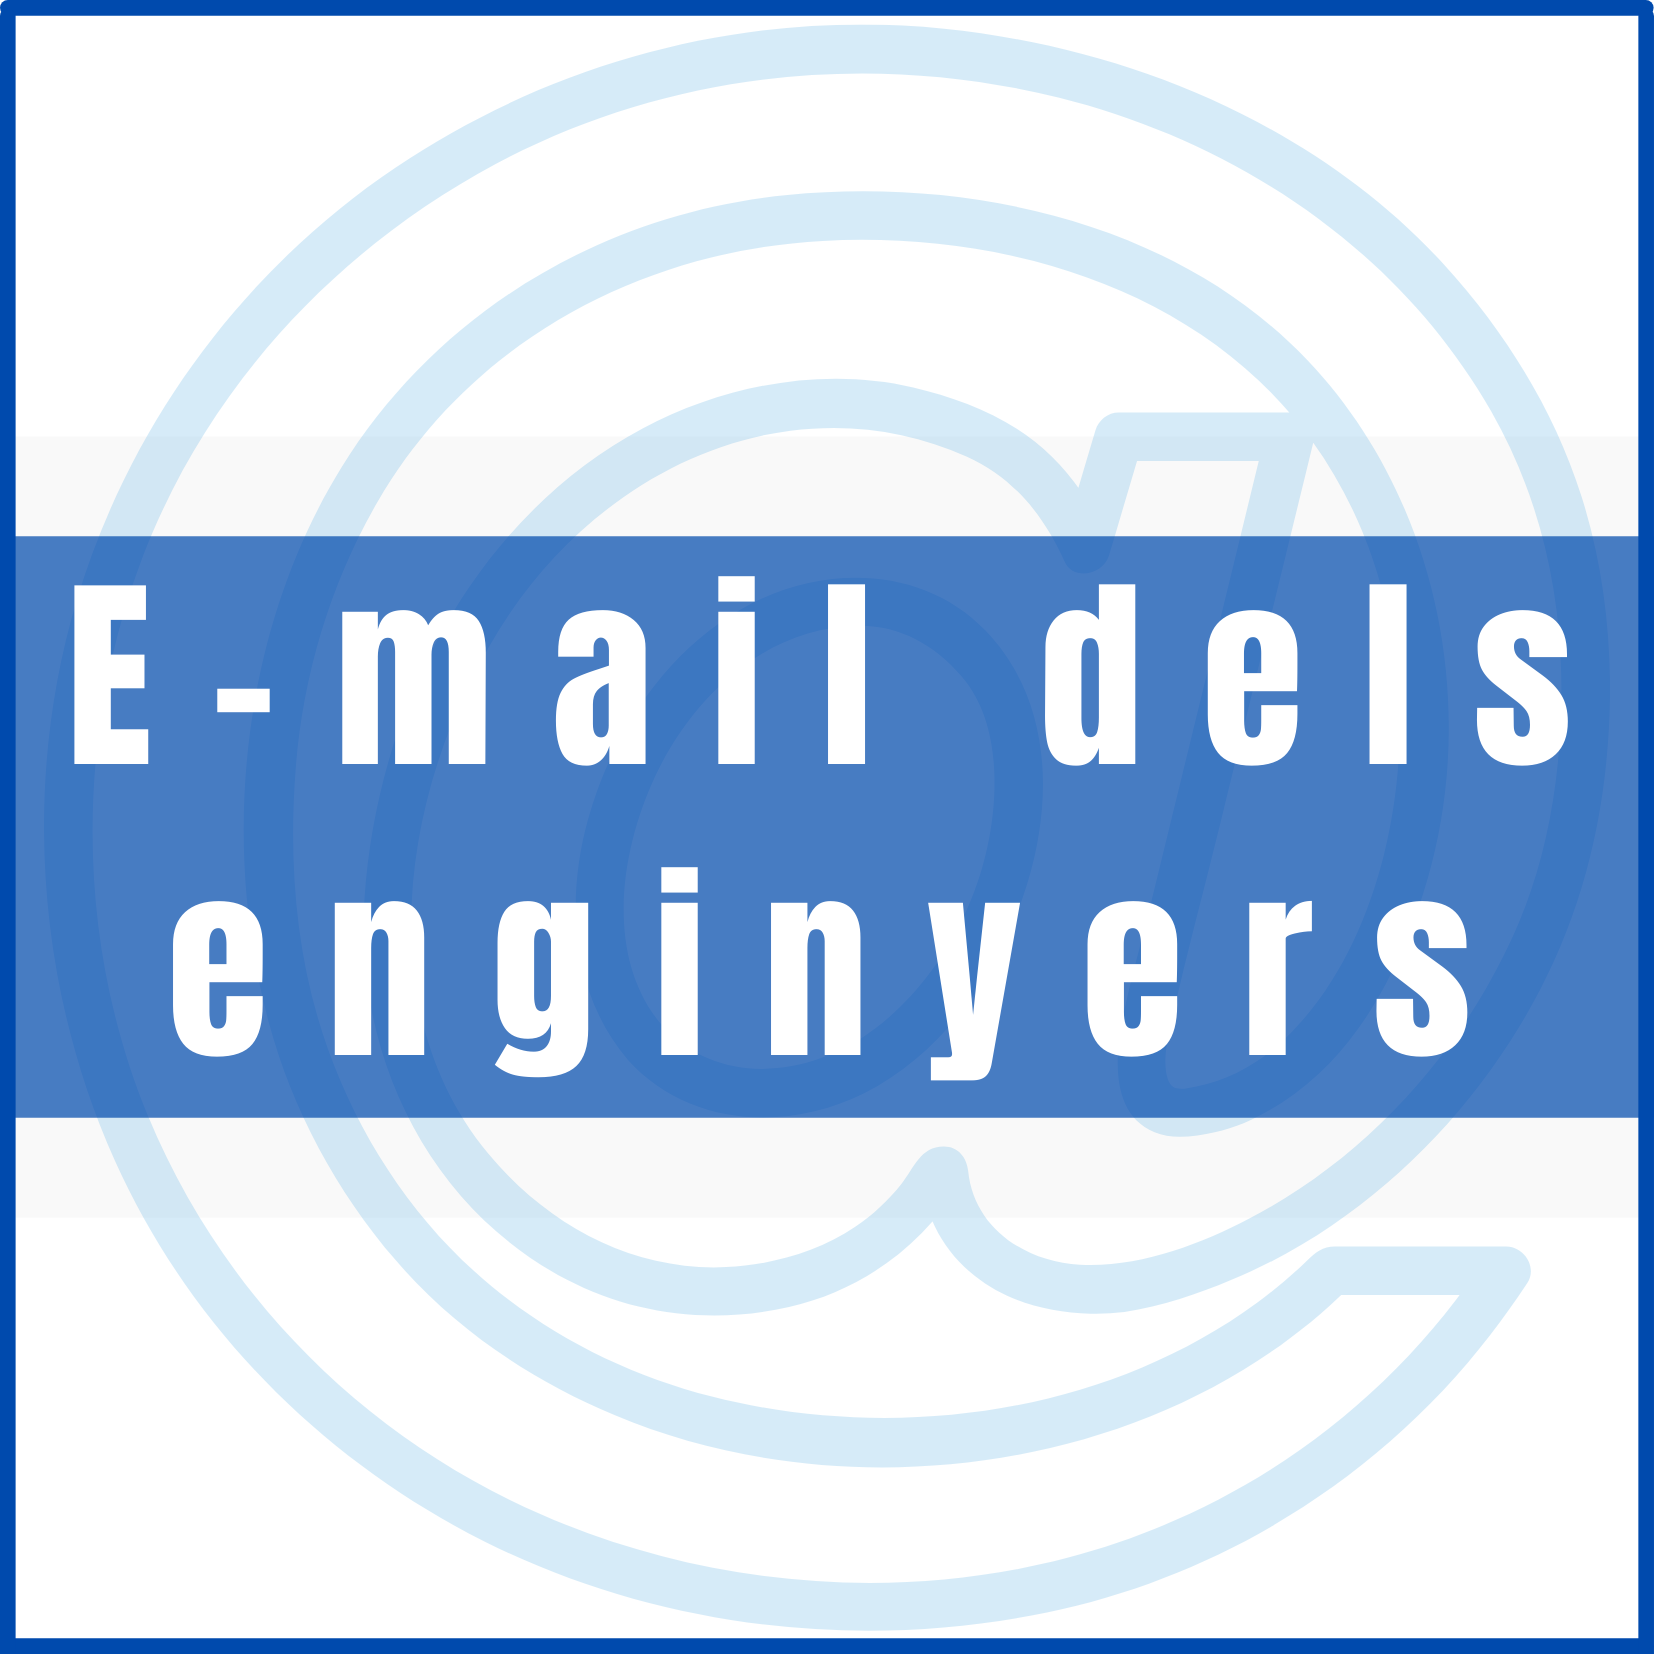 EMAIL DELS ENGINYERS/ES